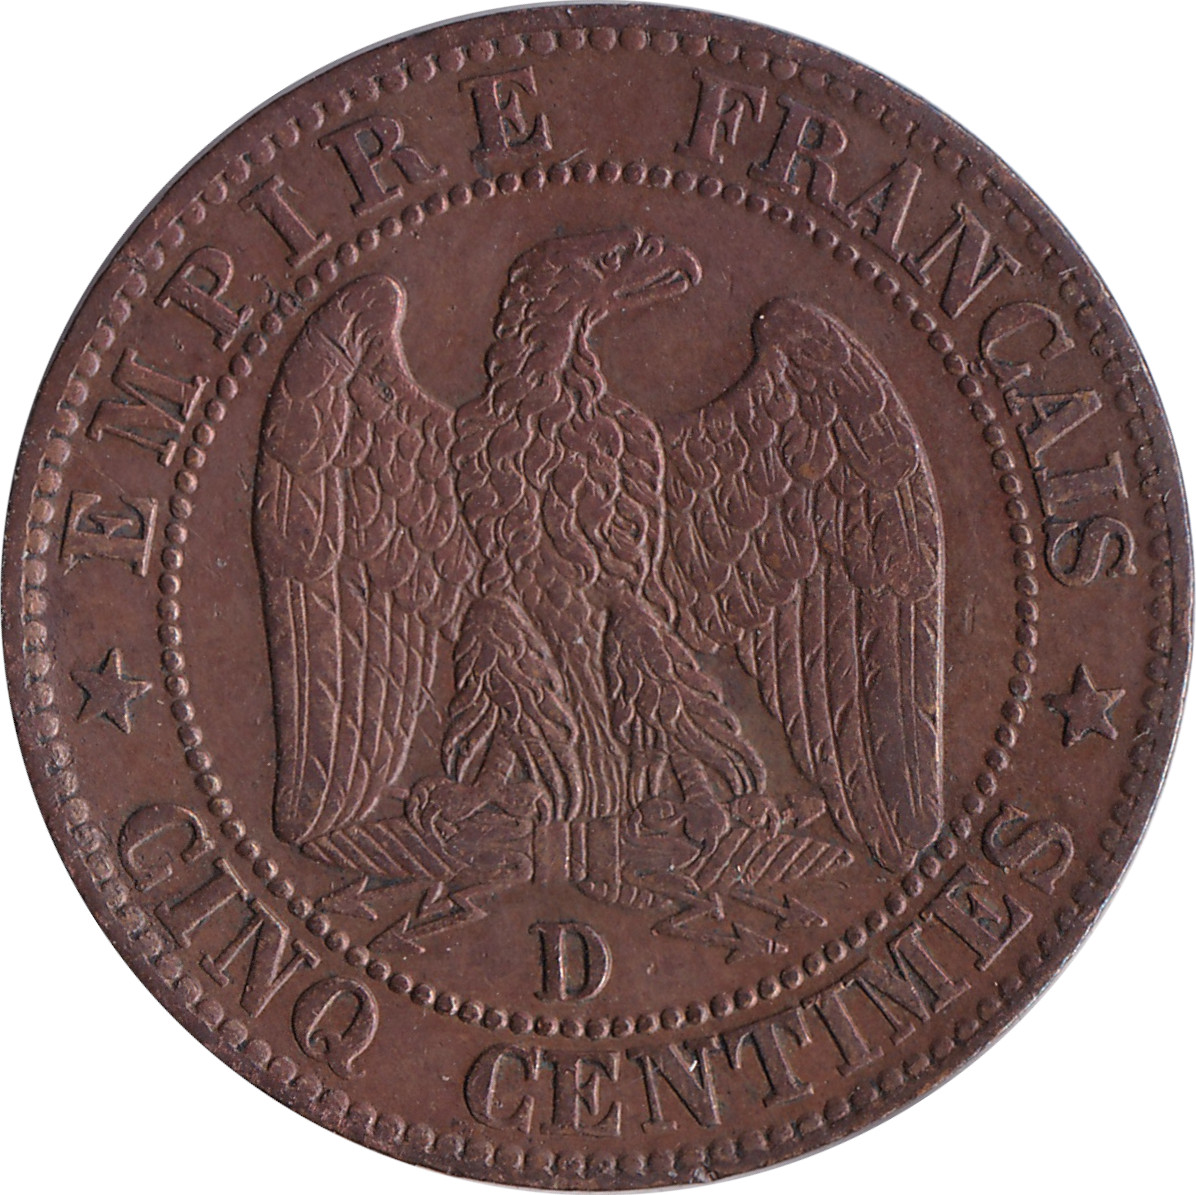 5 centimes - Napoléon III - Bare head